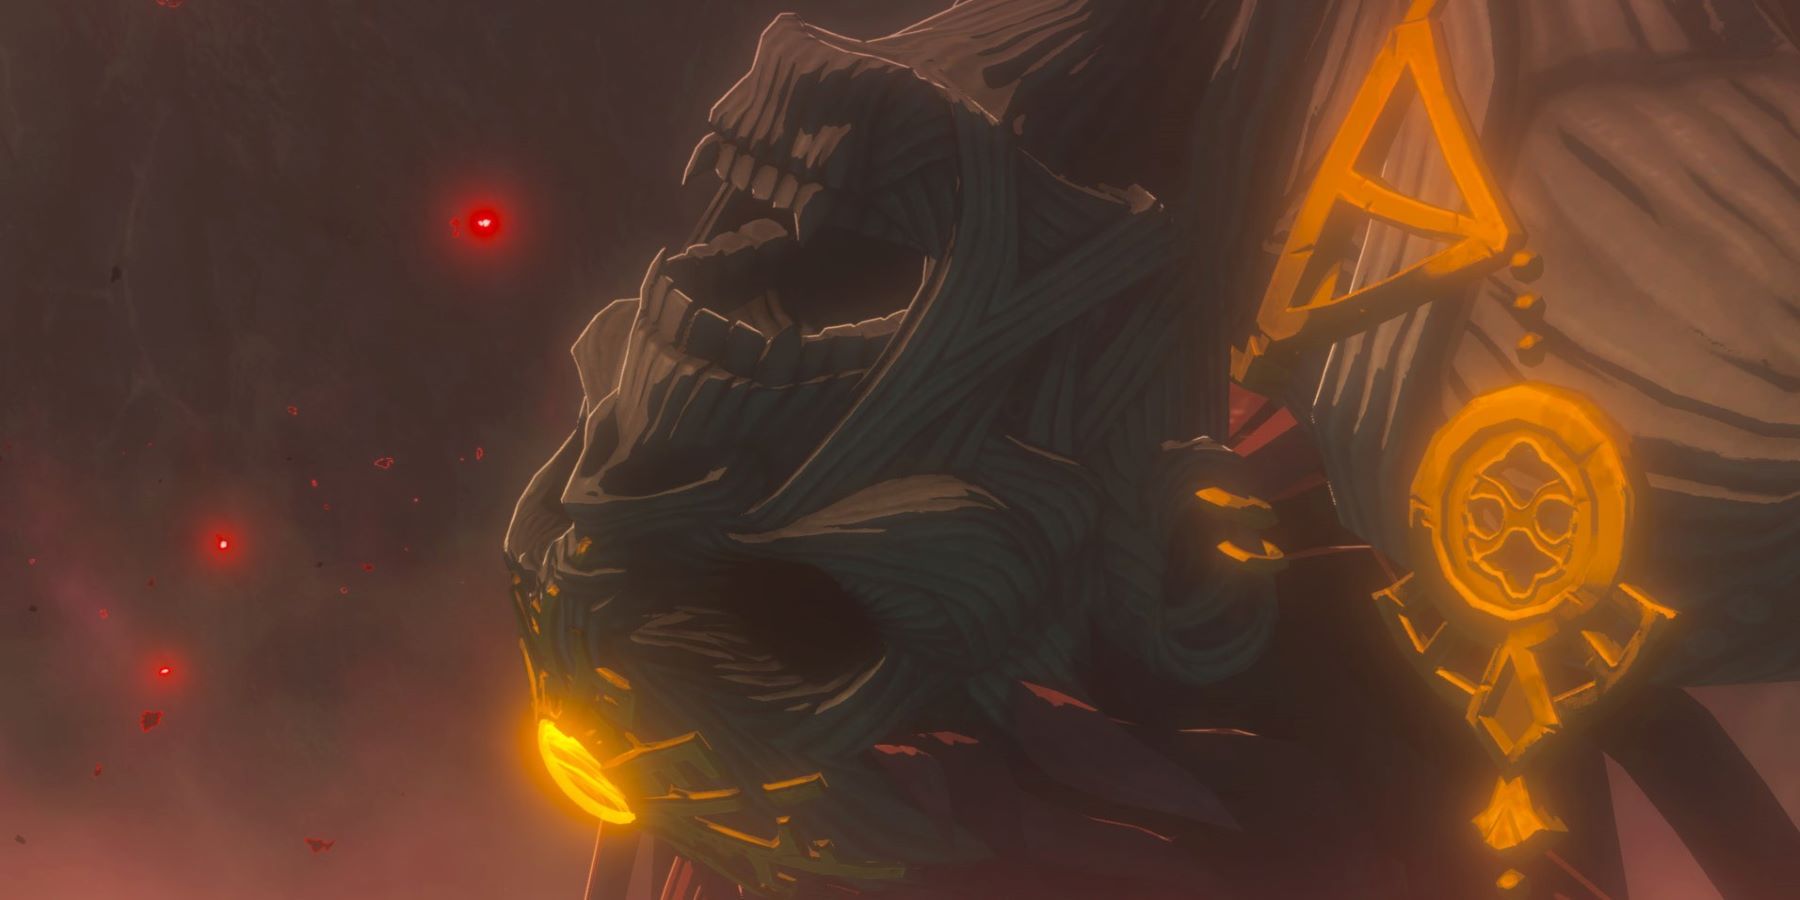 Ganondorf's corpse about to awaken in the Zelda: Breath of the Wild 2 announcement trailer